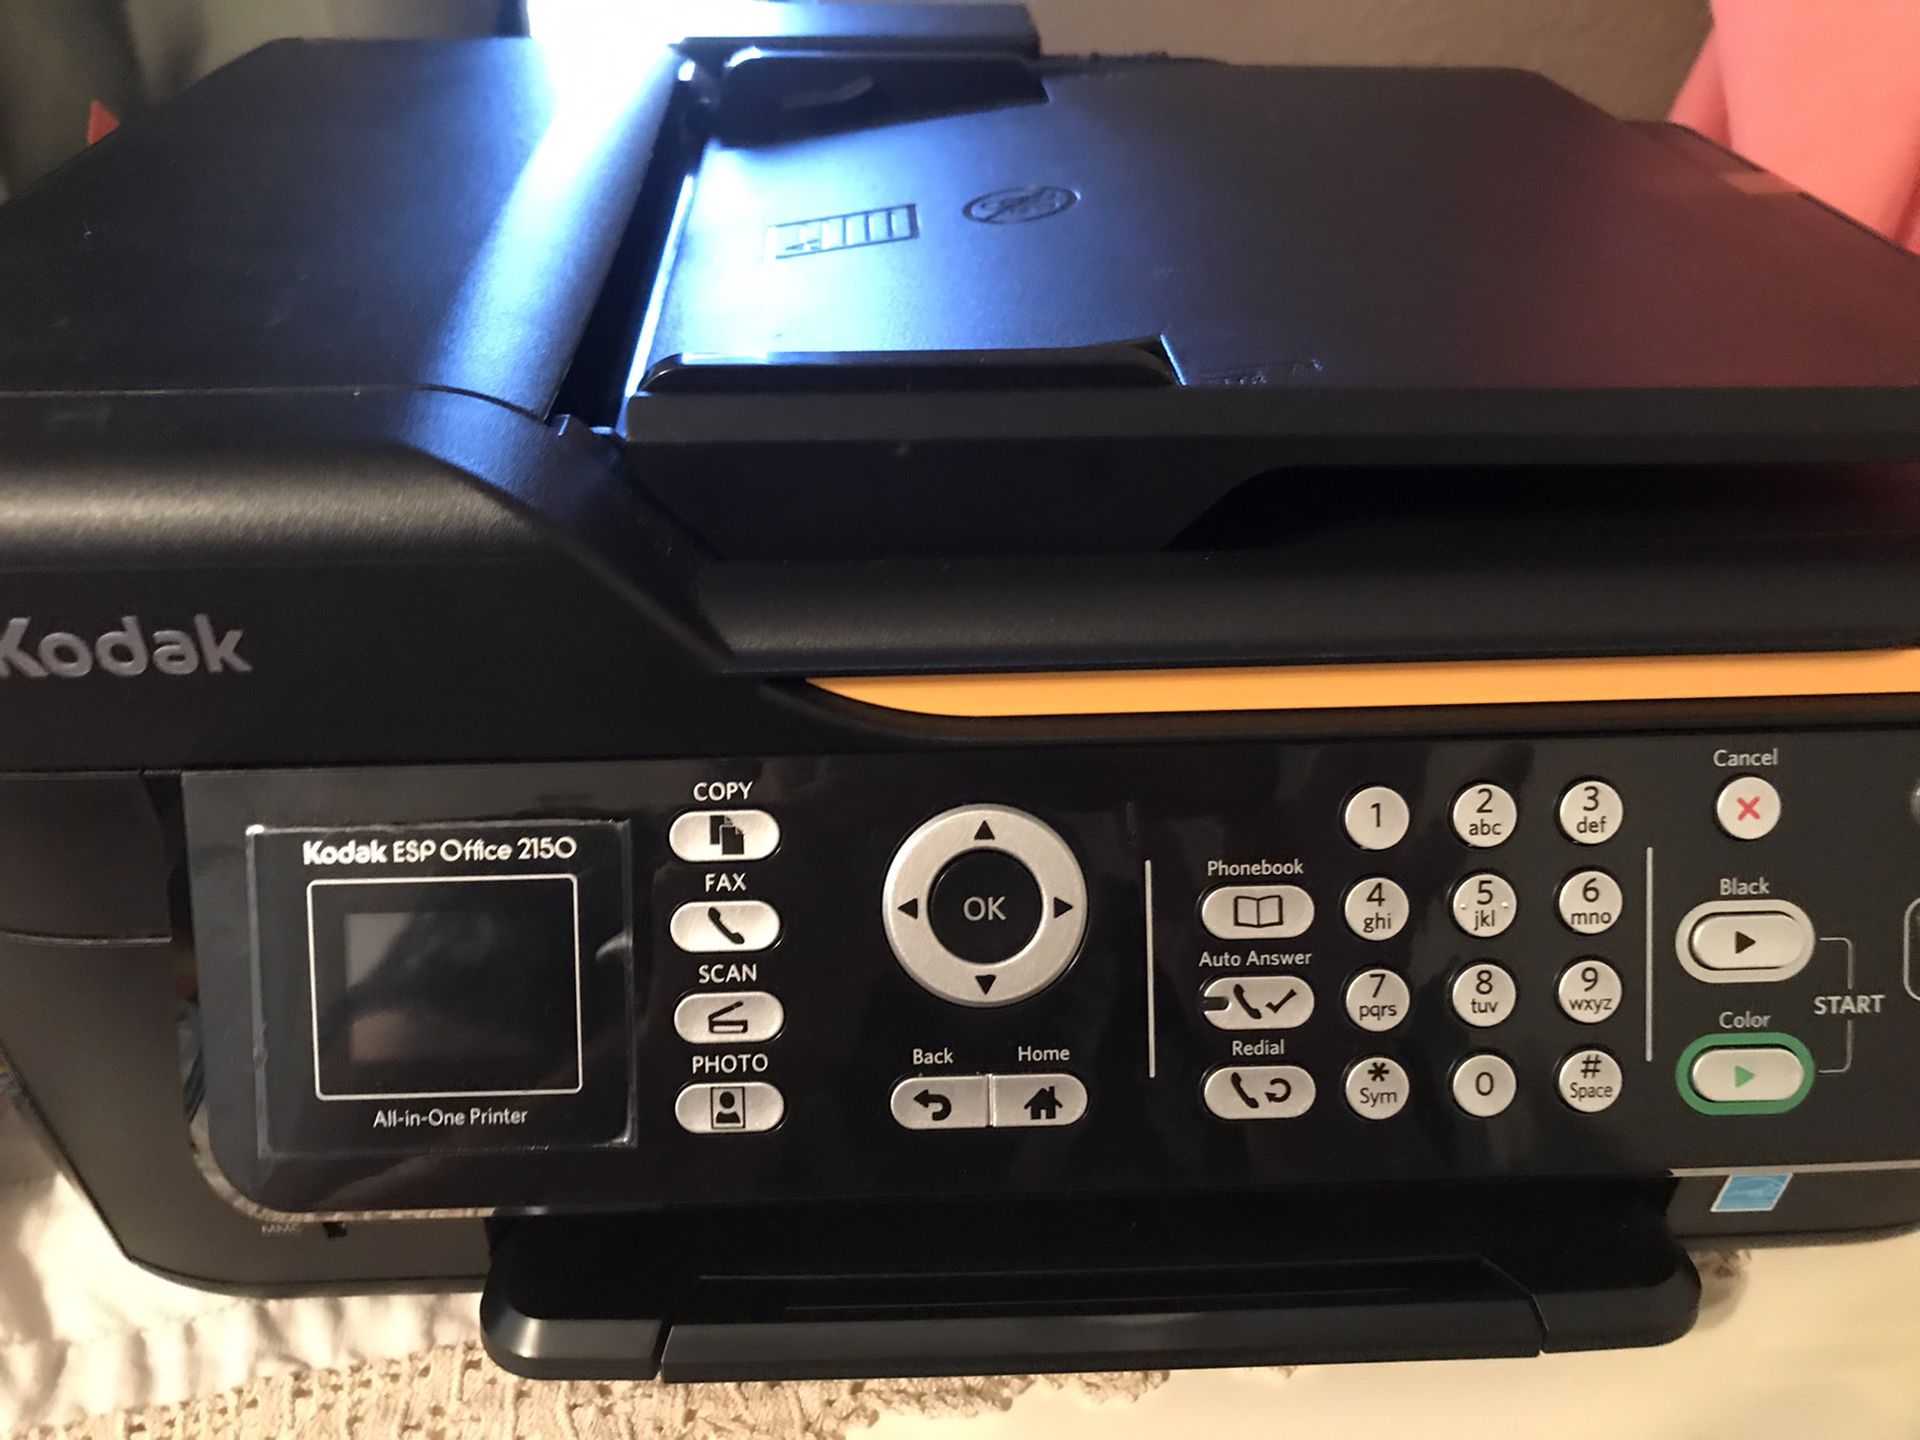 Kodak ESP Office 2150 printer